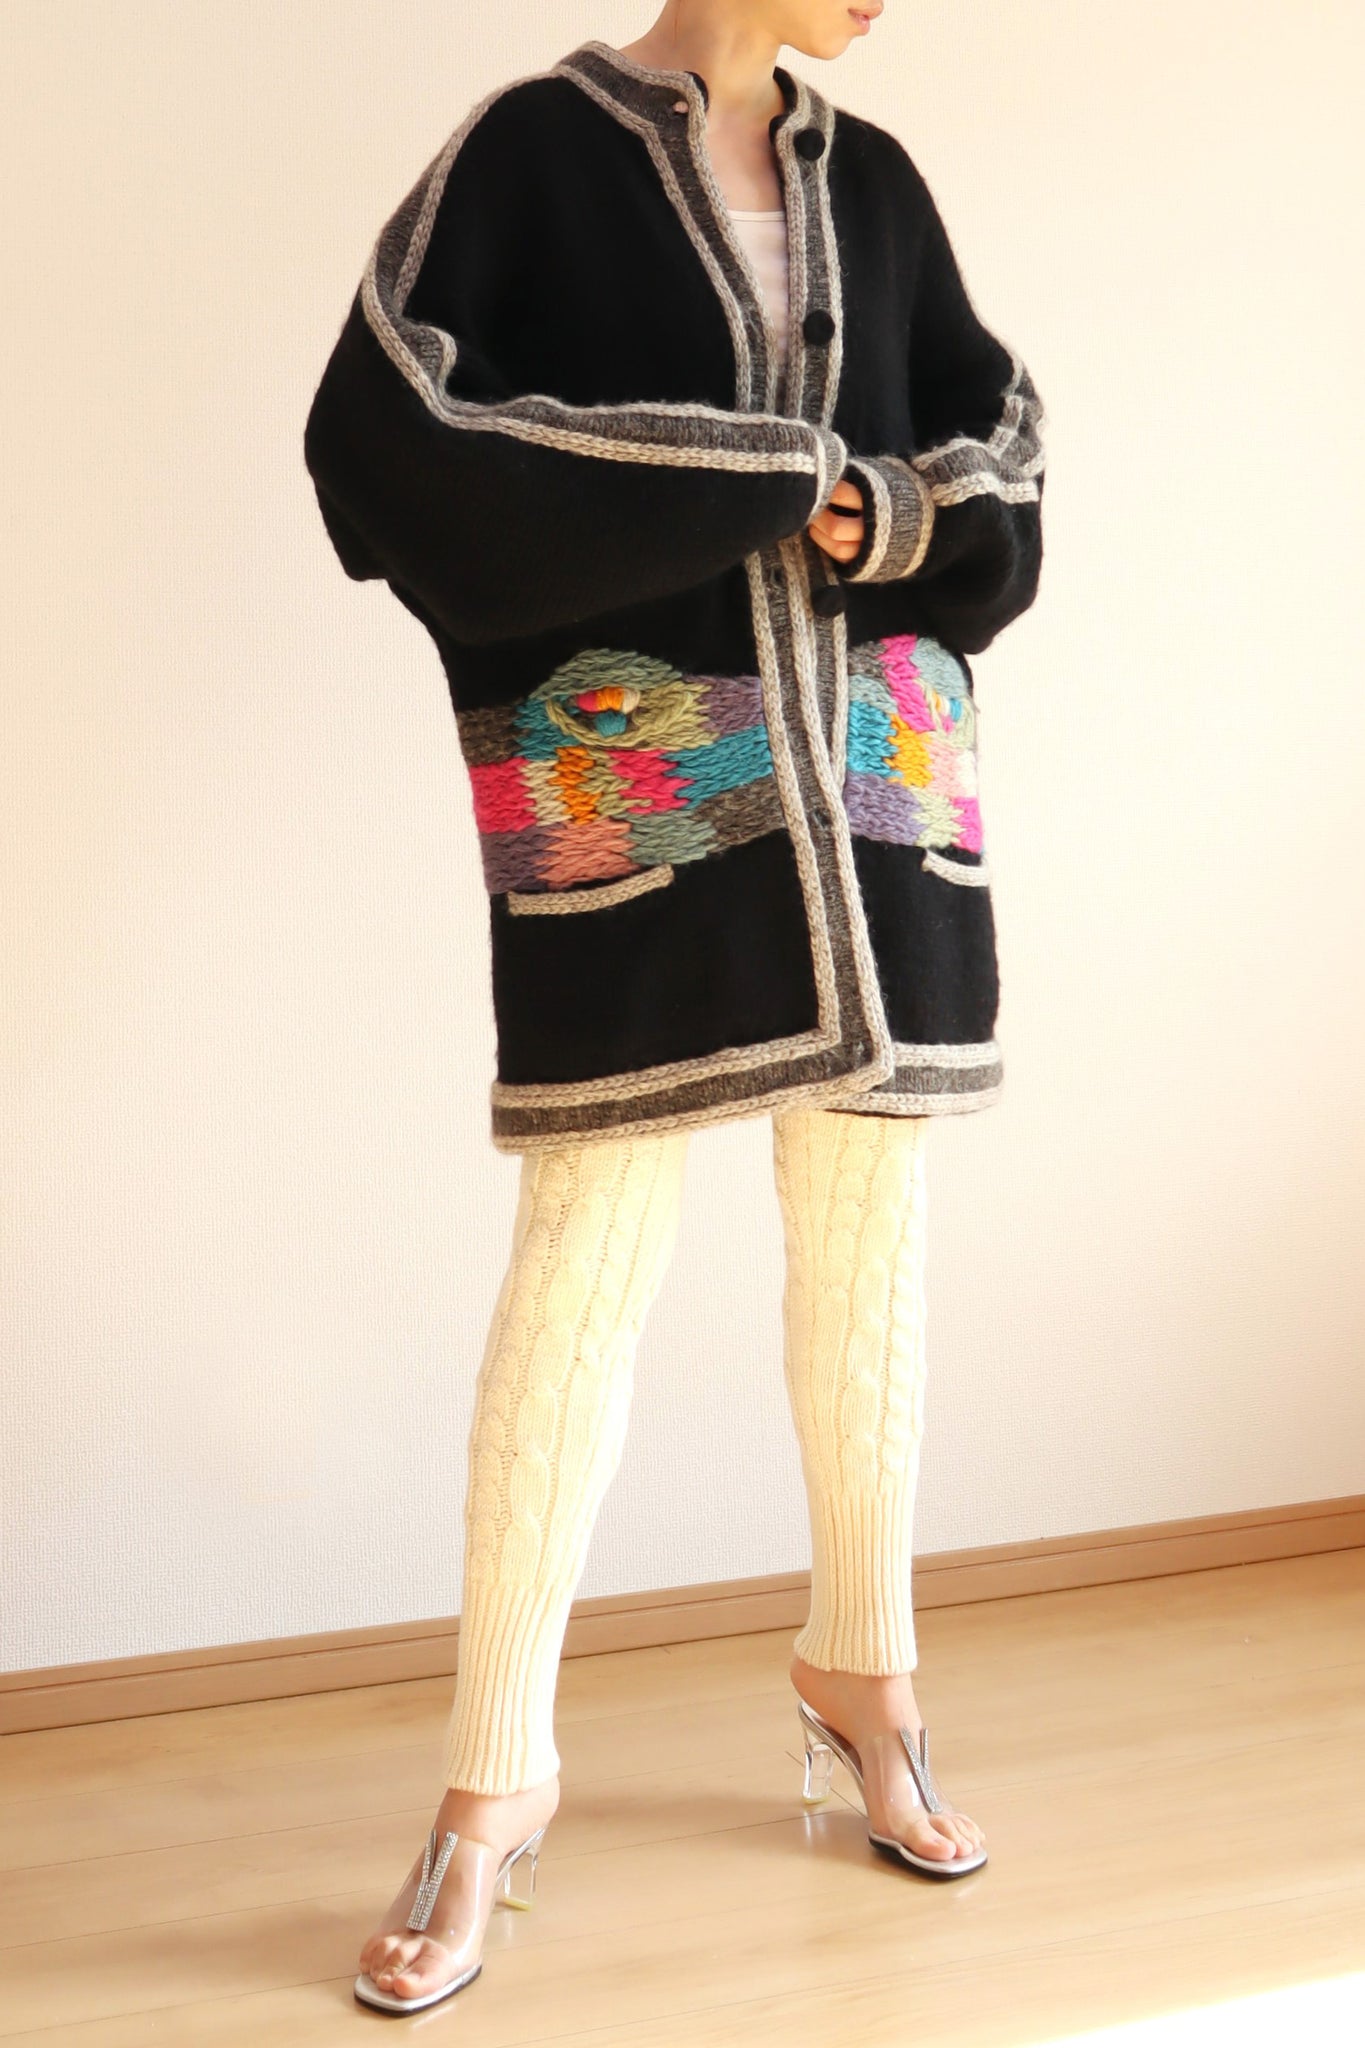 70s~80s Hand-Knit Black Chunky Wool Cardigan